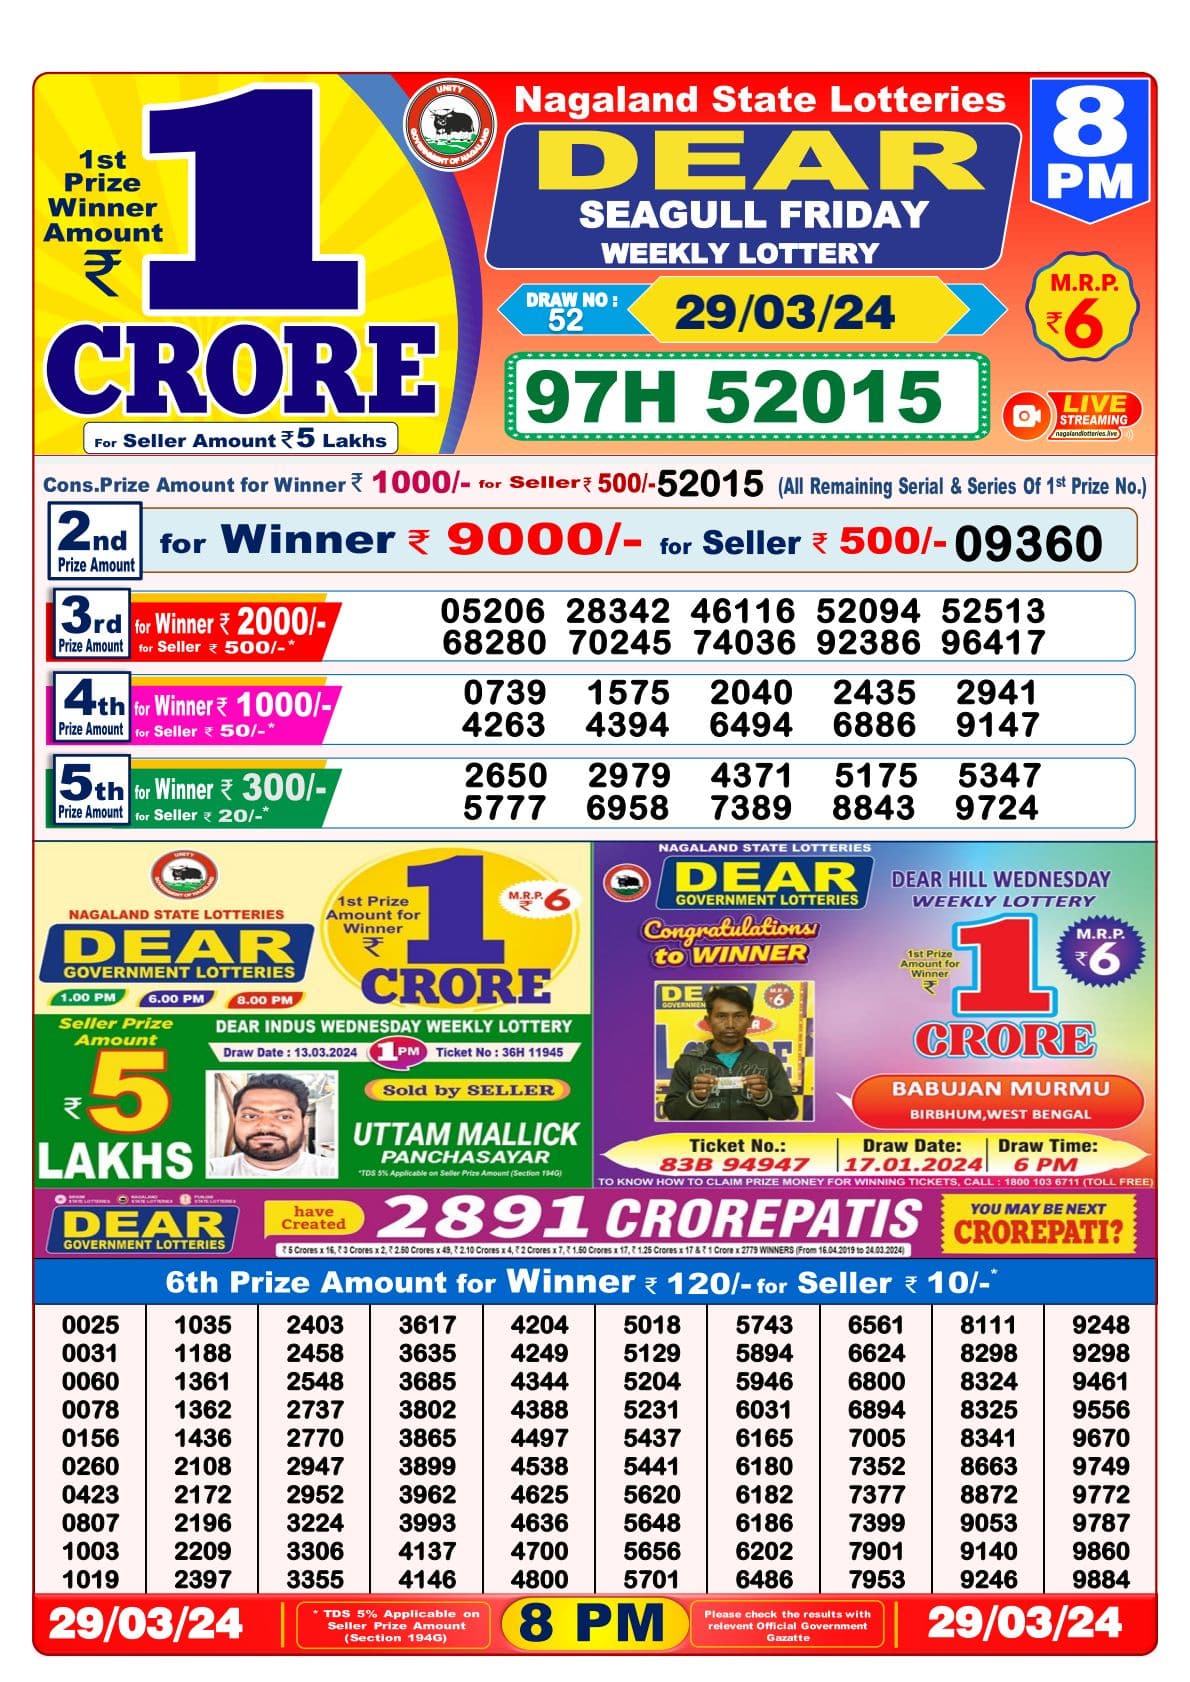 LIVE: Kerala Lottery Results 15.05.2019 Akshaya AK 395 Result Today,Kerala  State Akshaya Lottery AK 395 Result and Bumper Prize Winner List at  official website